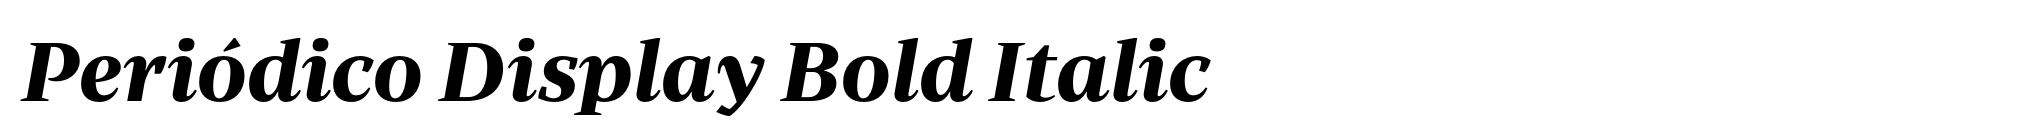 Periódico Display Bold Italic image